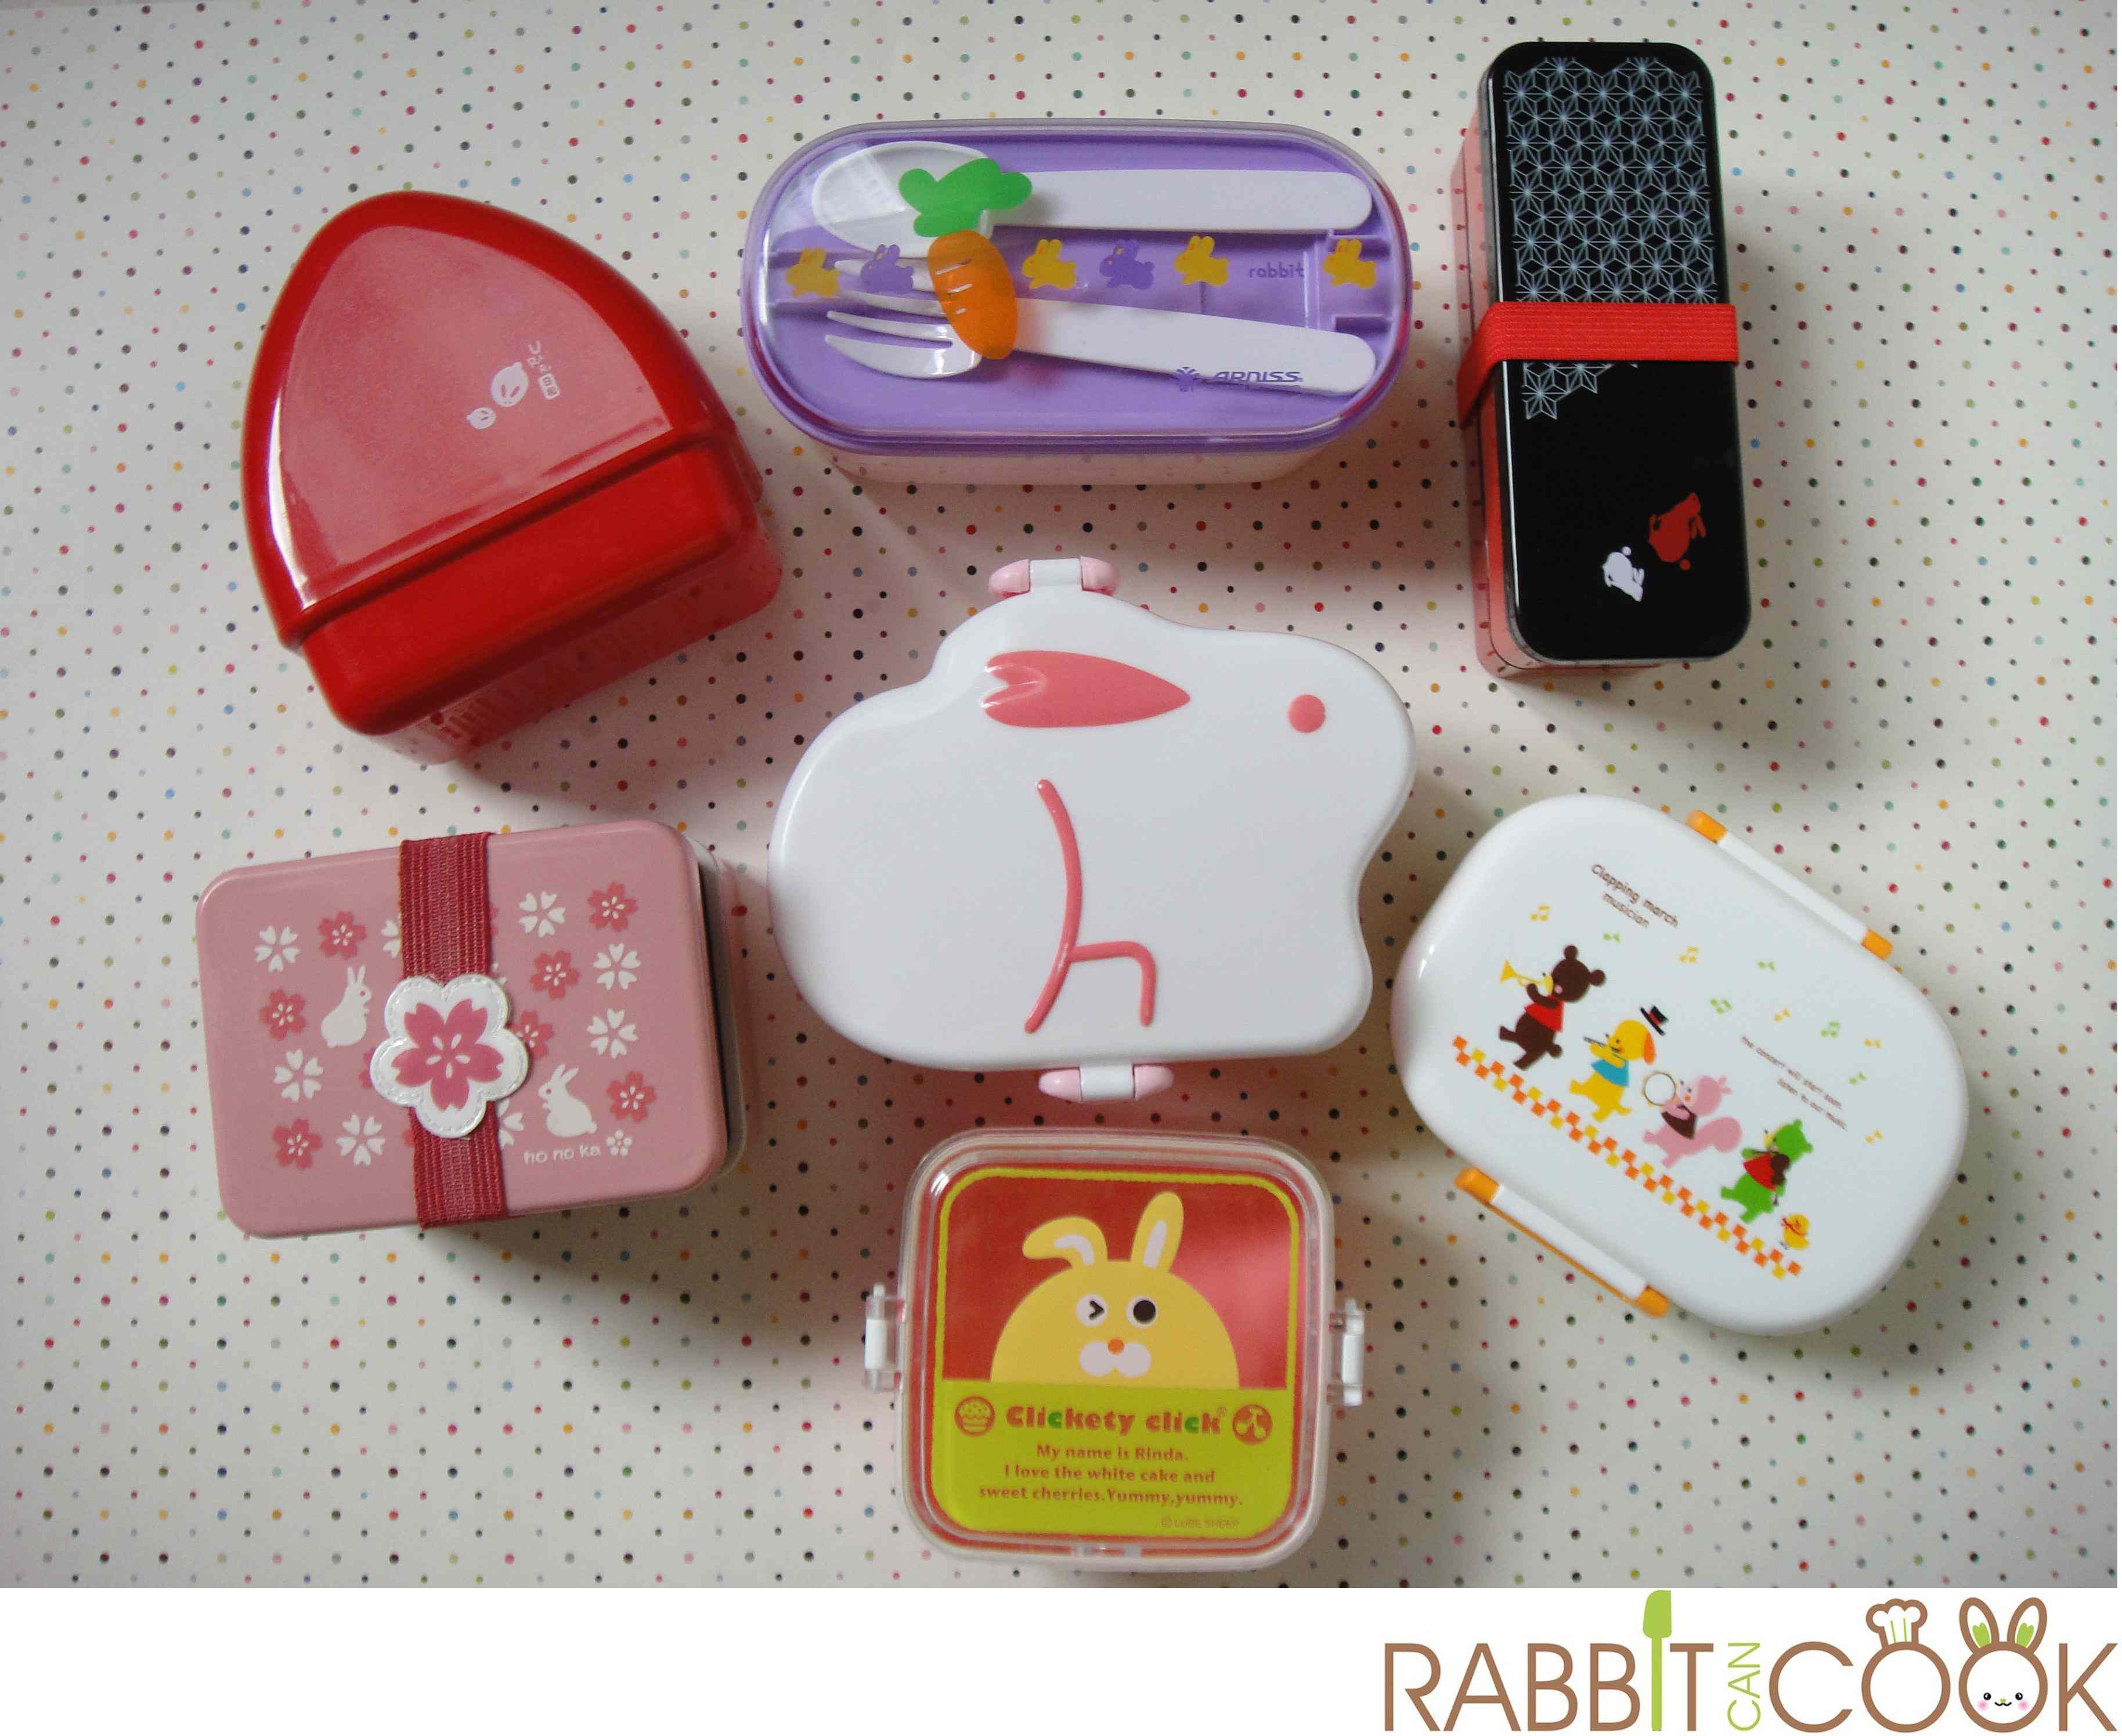 https://rabbitcancook.files.wordpress.com/2012/01/rabbit-bento-boxes.jpg